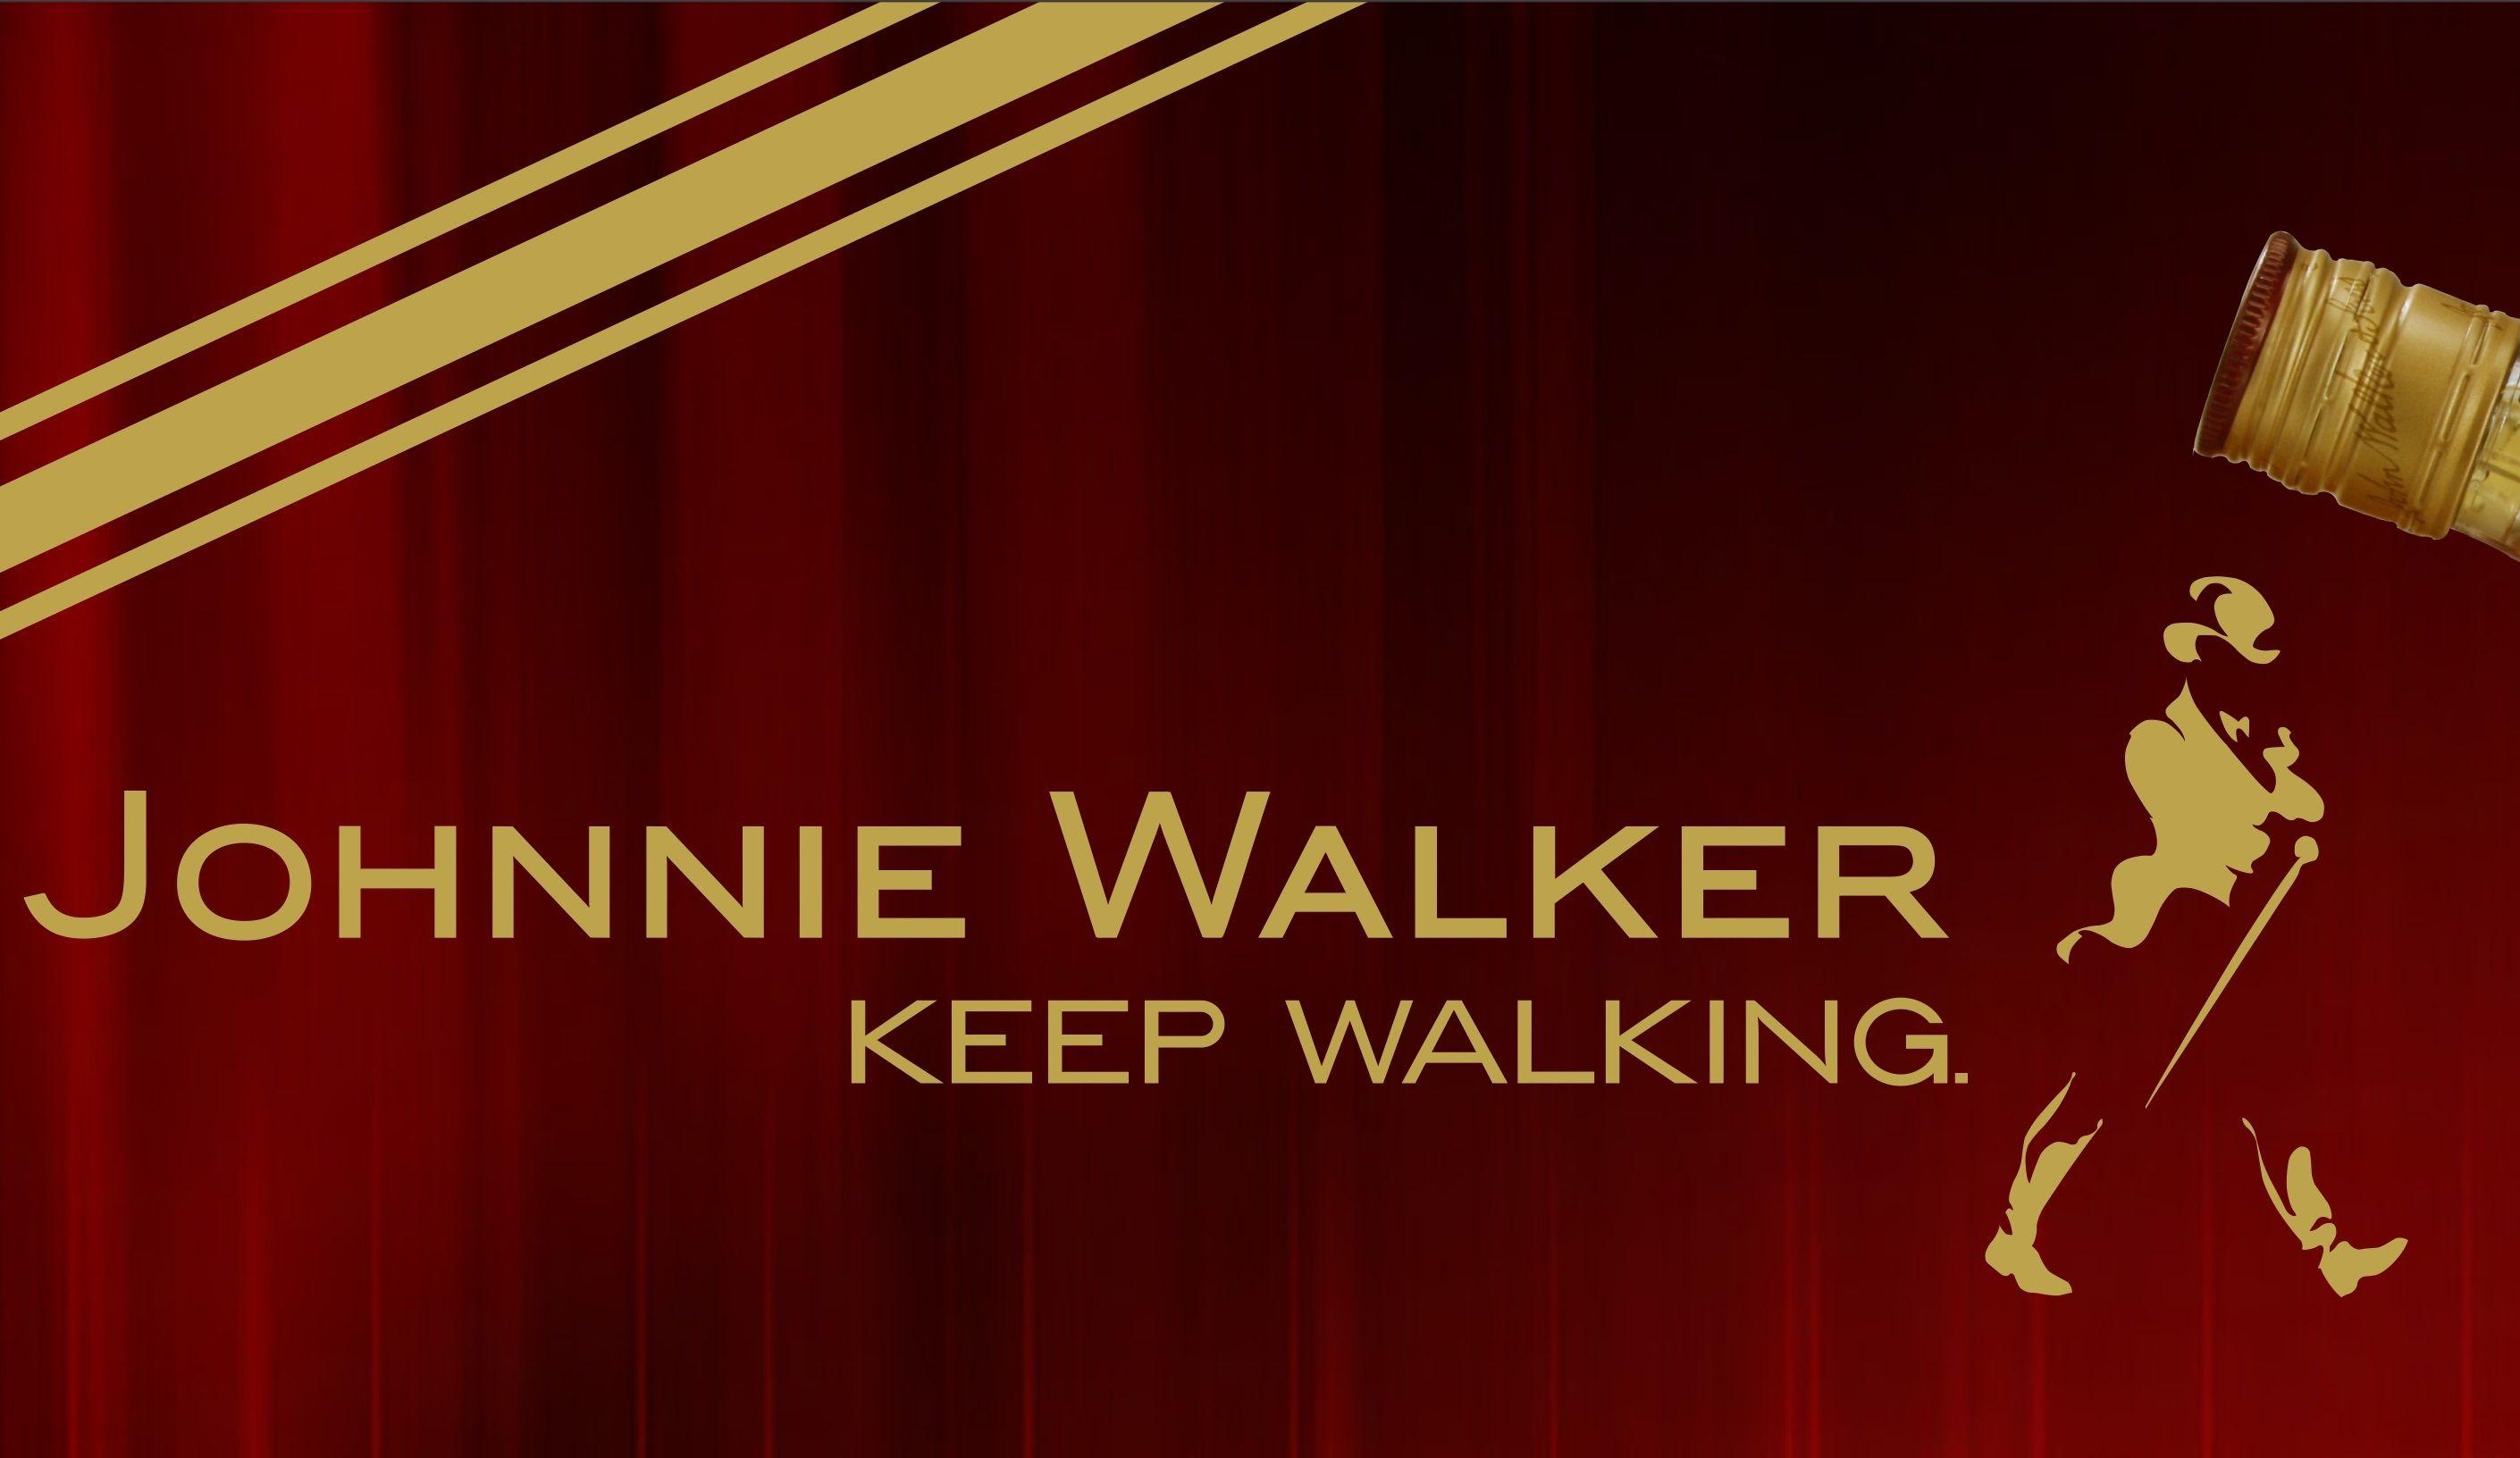 Johnnie Walker Wallpaper Image Photo Picture Background